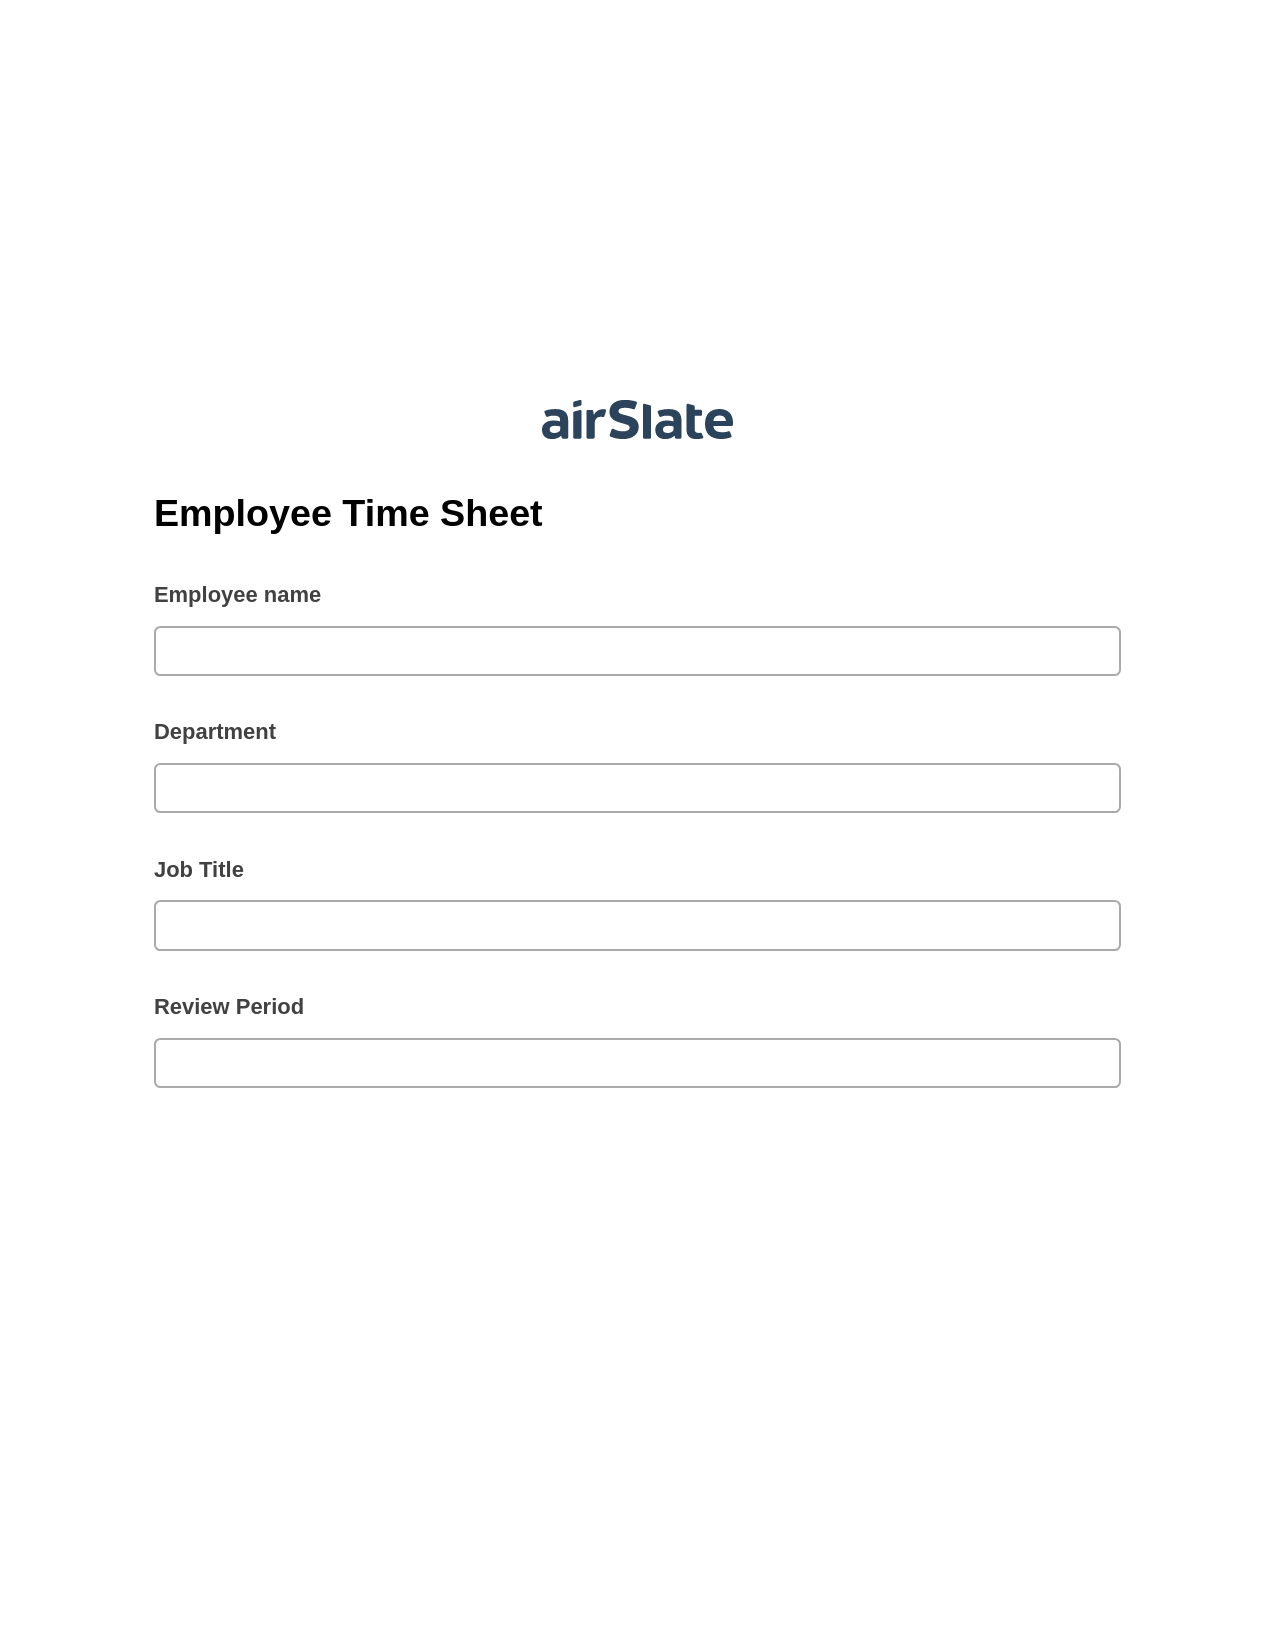 Multirole Employee Time Sheet Pre-fill from Litmos bot, Create Salesforce Records Bot, Export to Smartsheet